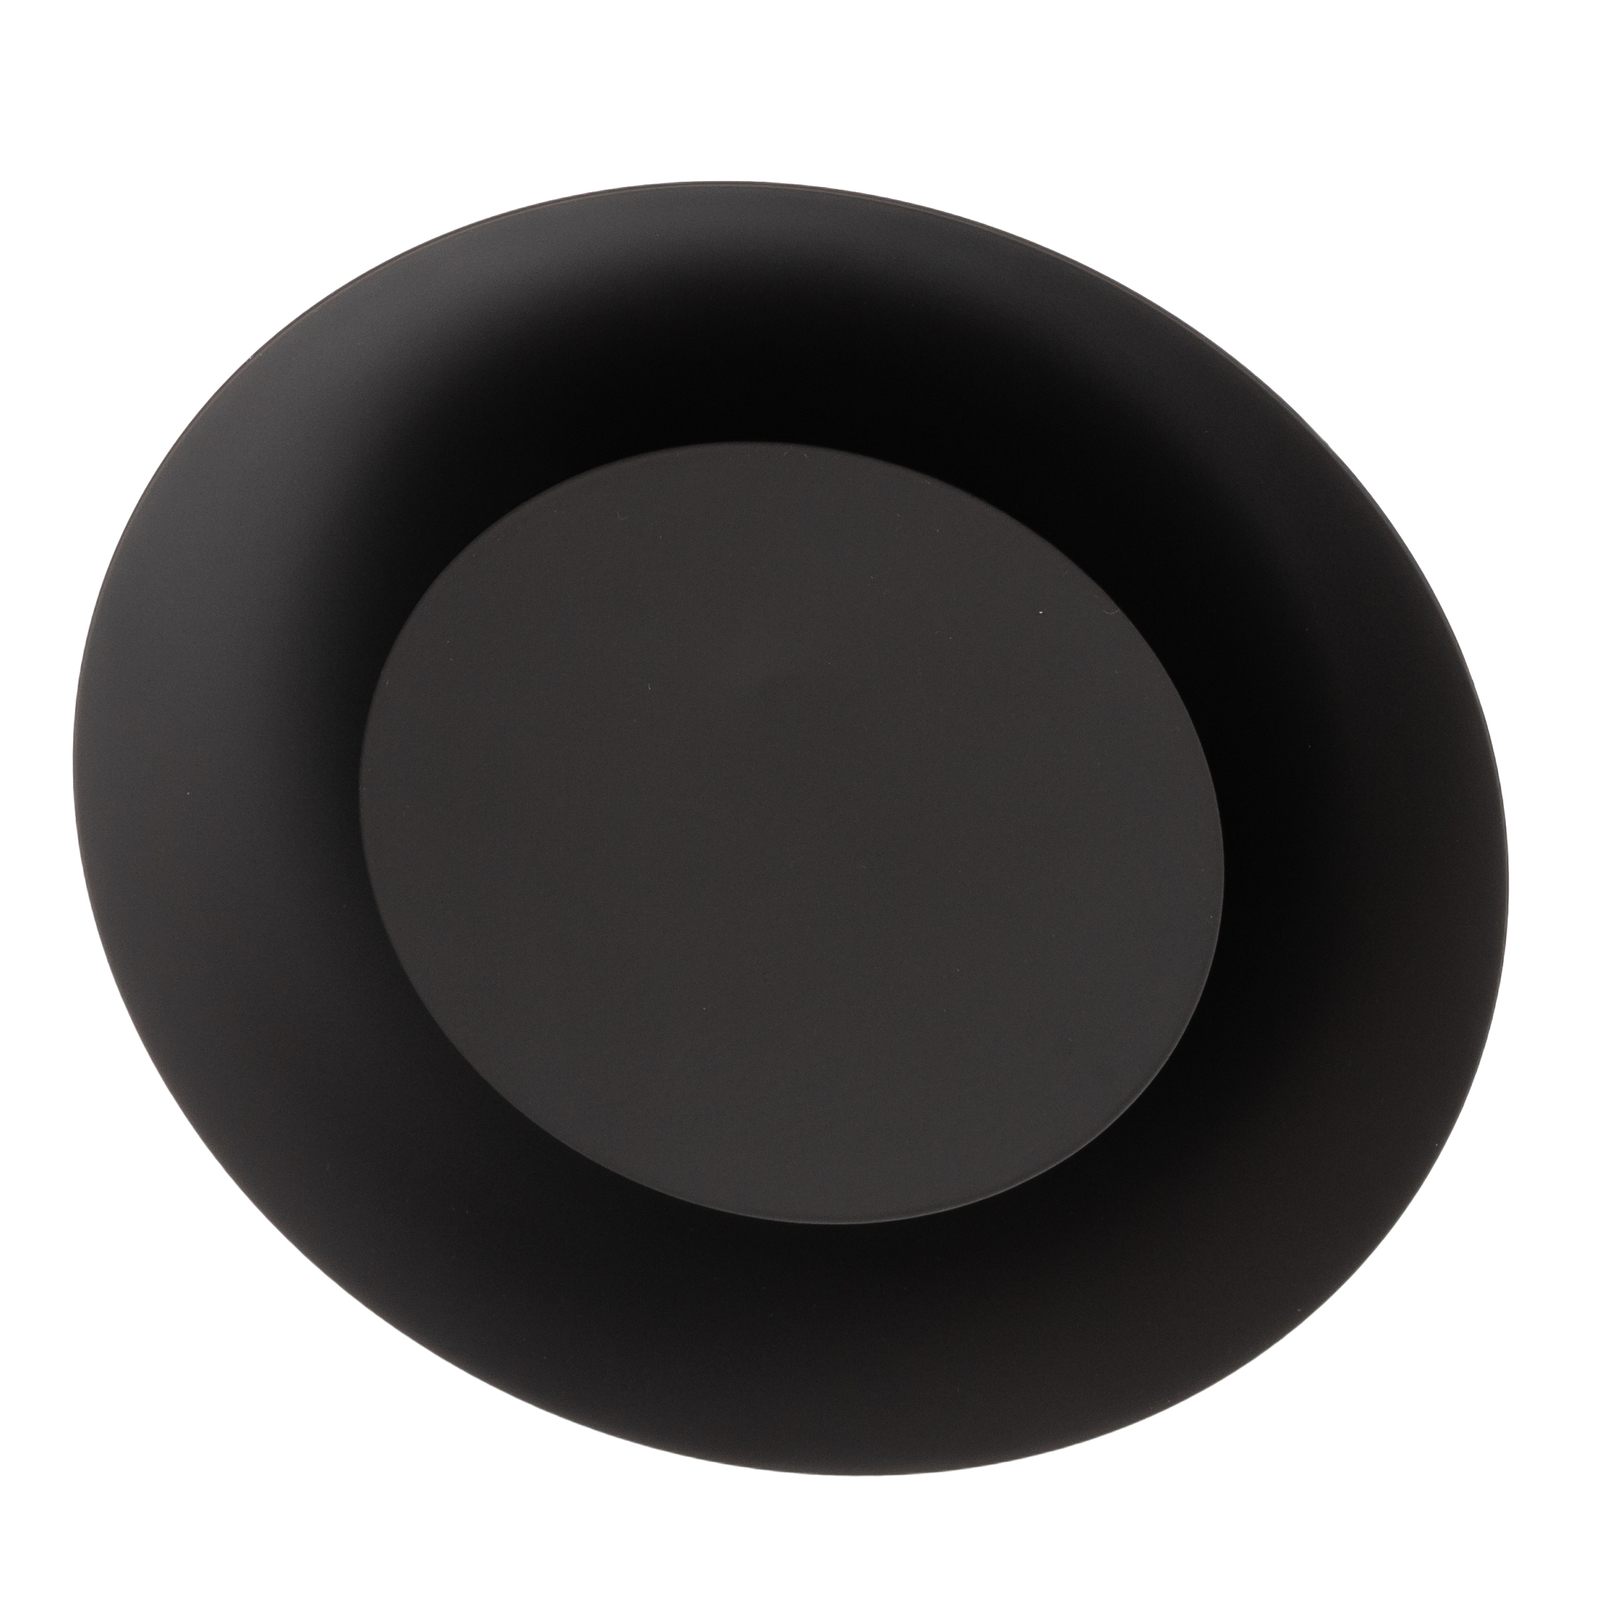 Lampa sufitowa LED Foskal w kolorze czarnym, Ø 21,5 cm